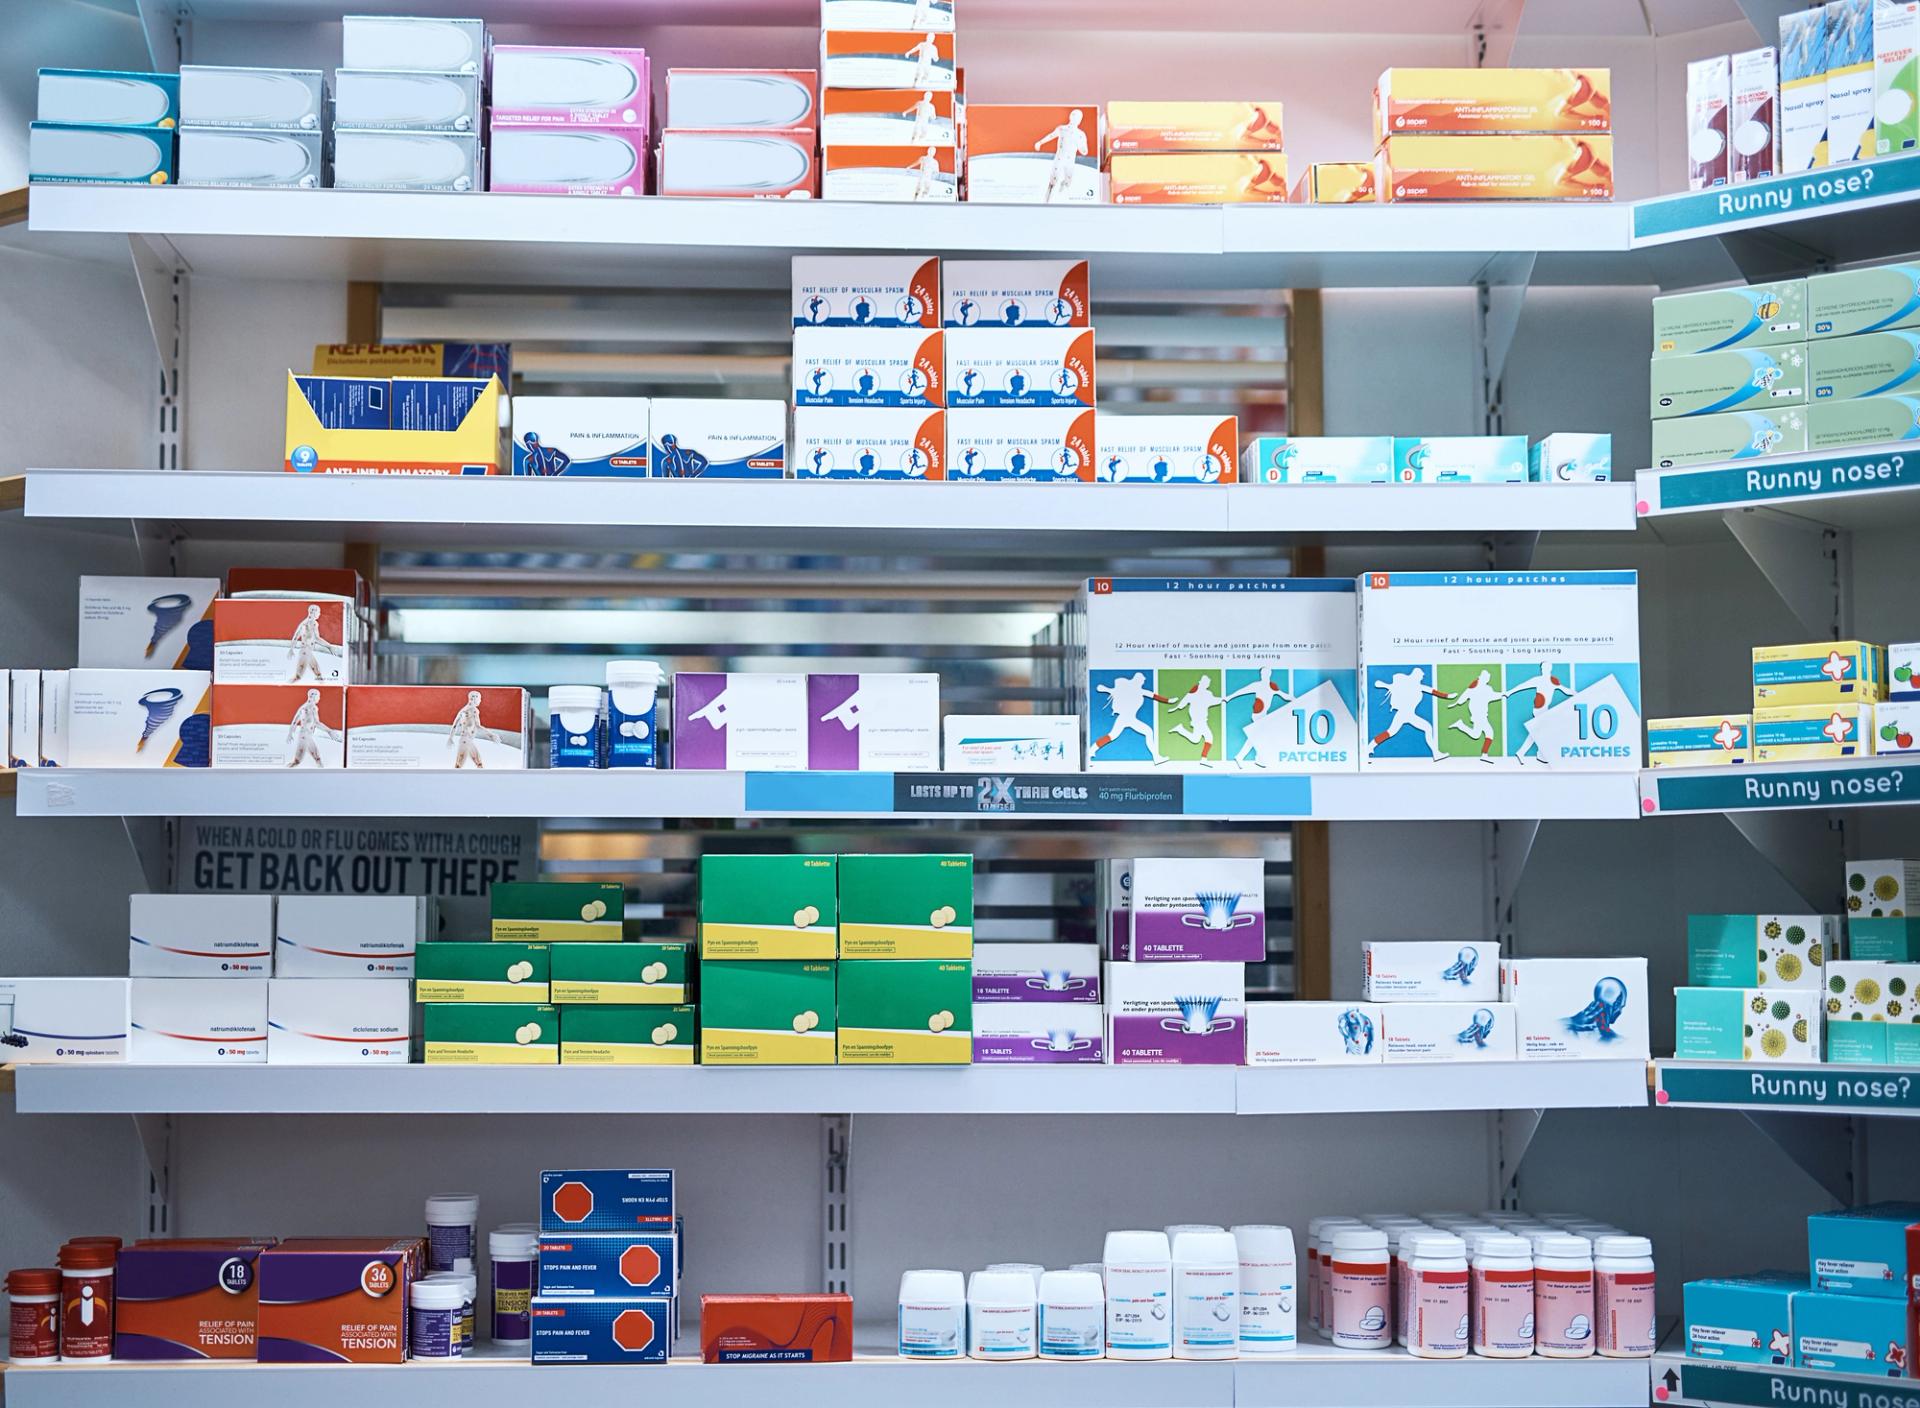 Medicines stored on shelves